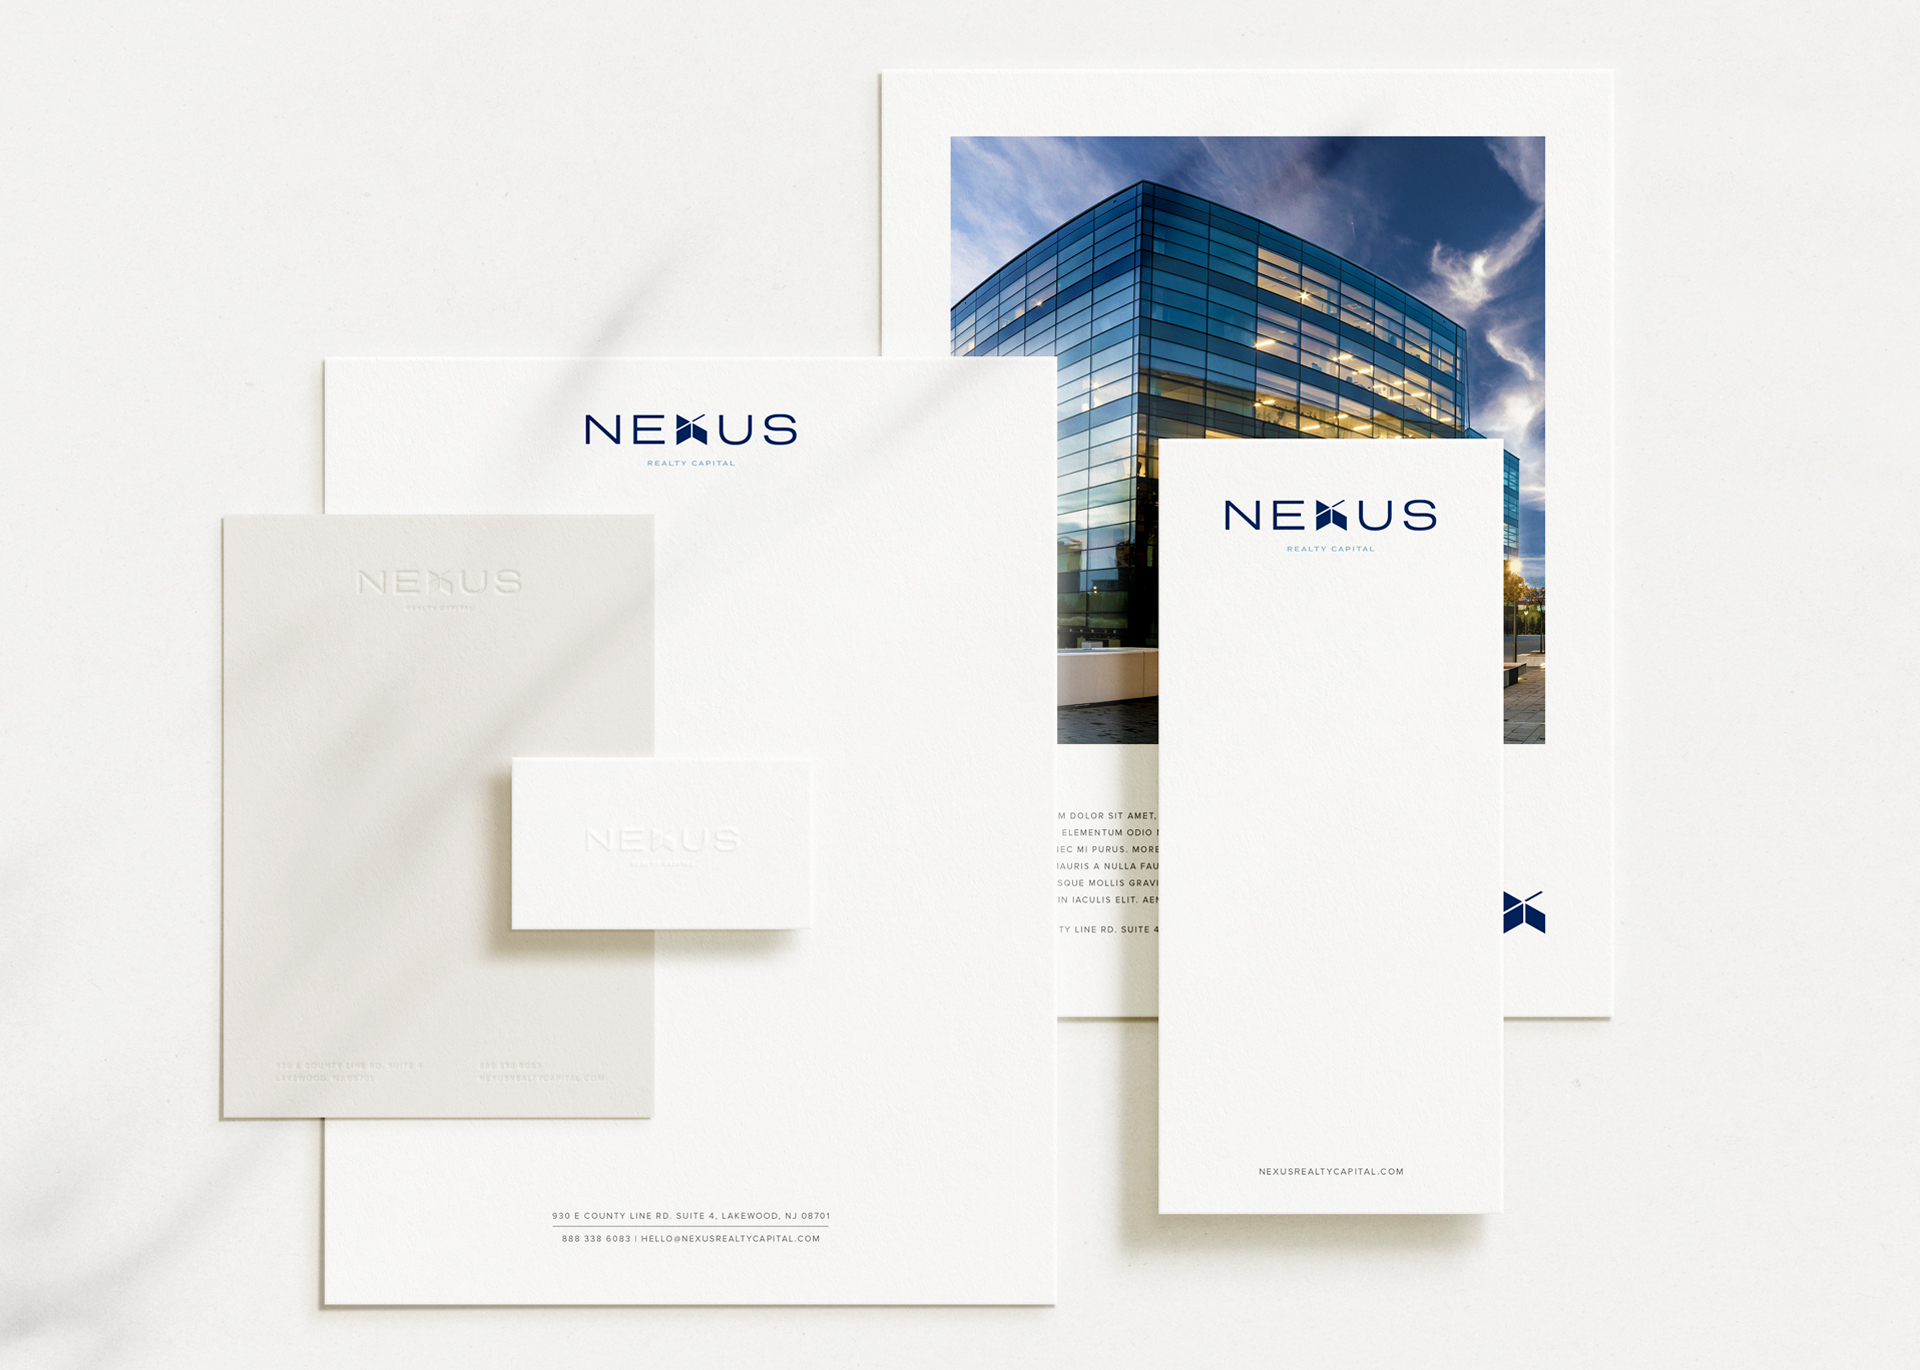 Nexus Realty Capital